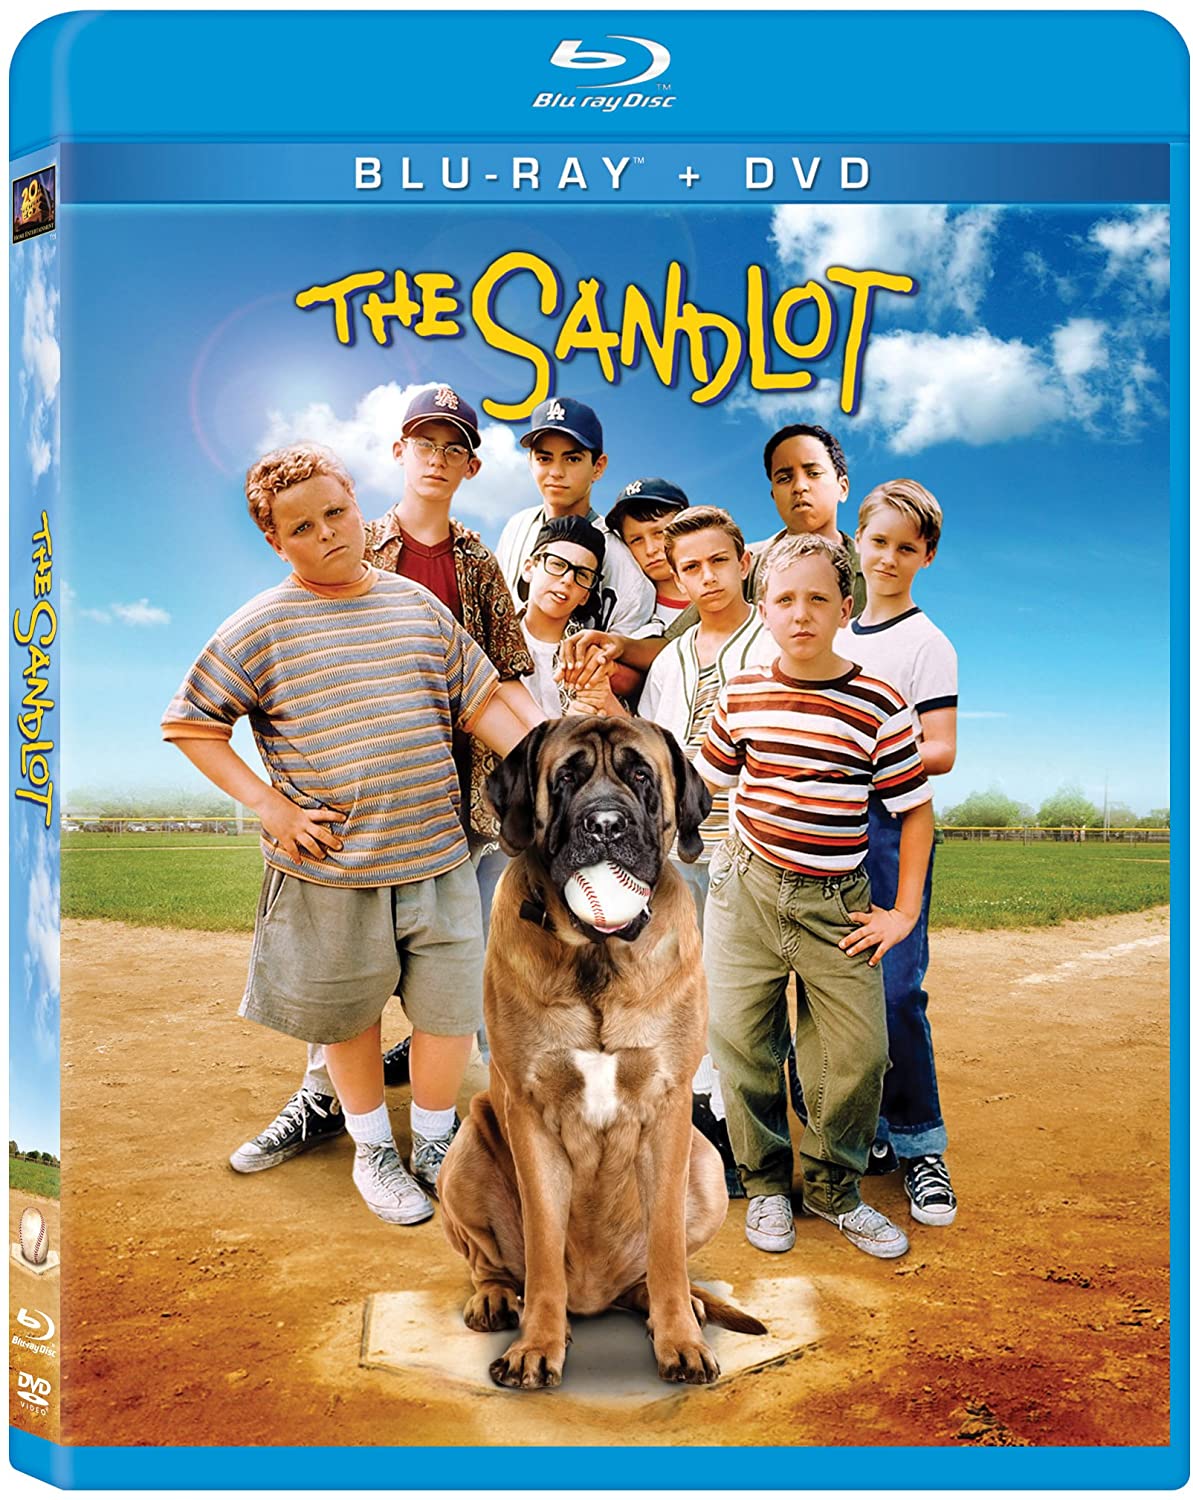 The Sandlot (20th Anniversary) (Blu-ray + DVD) (Bilingual) [Import] [Blu-ray]